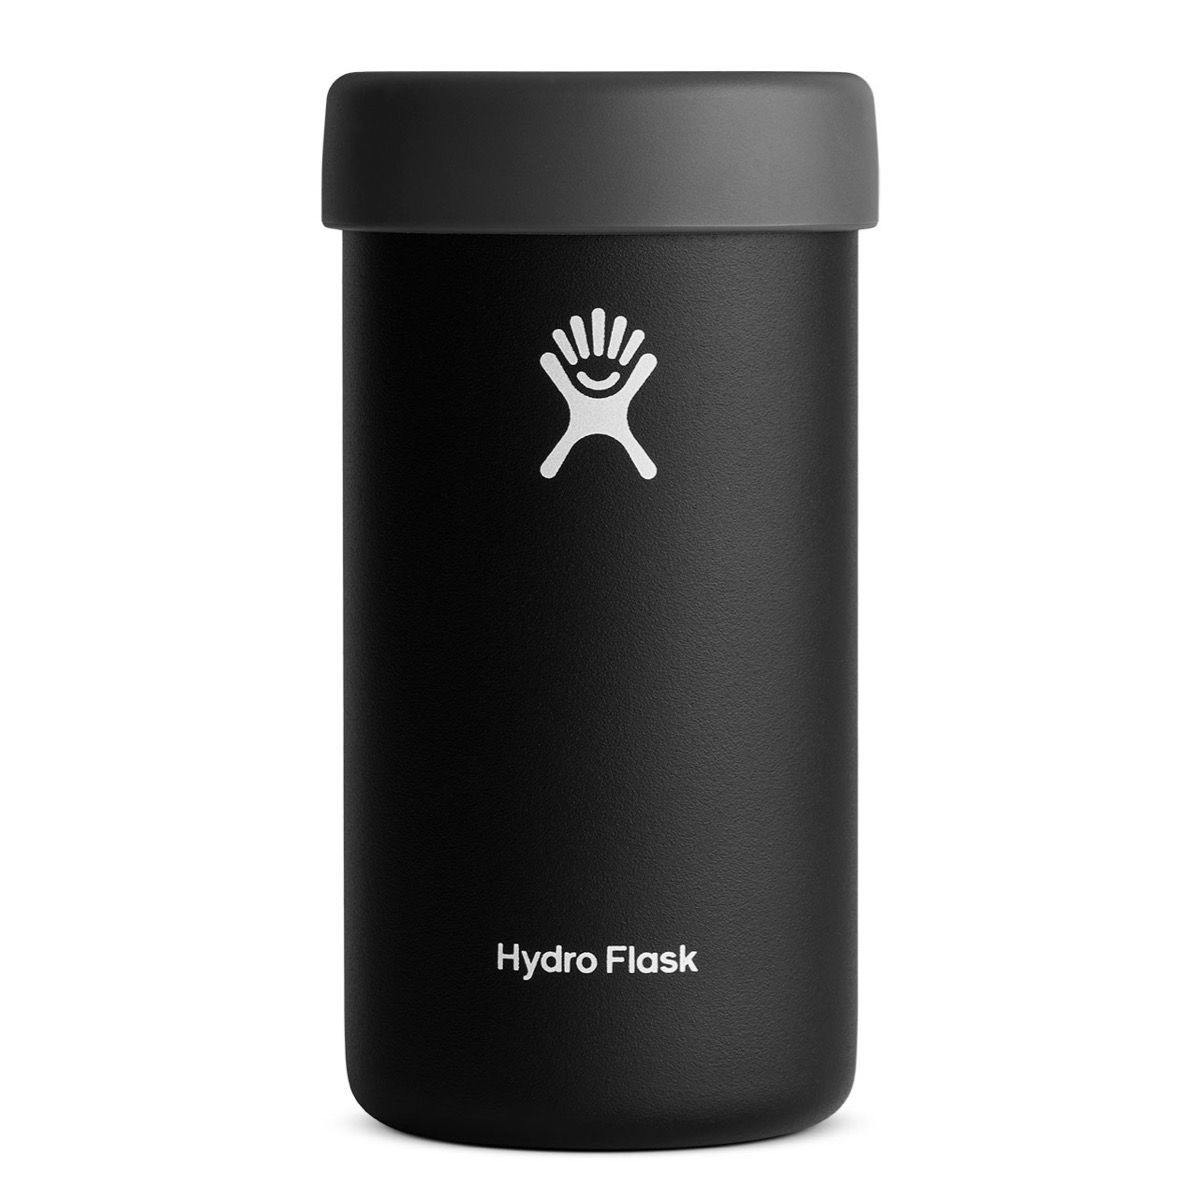 Hydro Flask Tallboy 16 oz Cooler Cup · Black